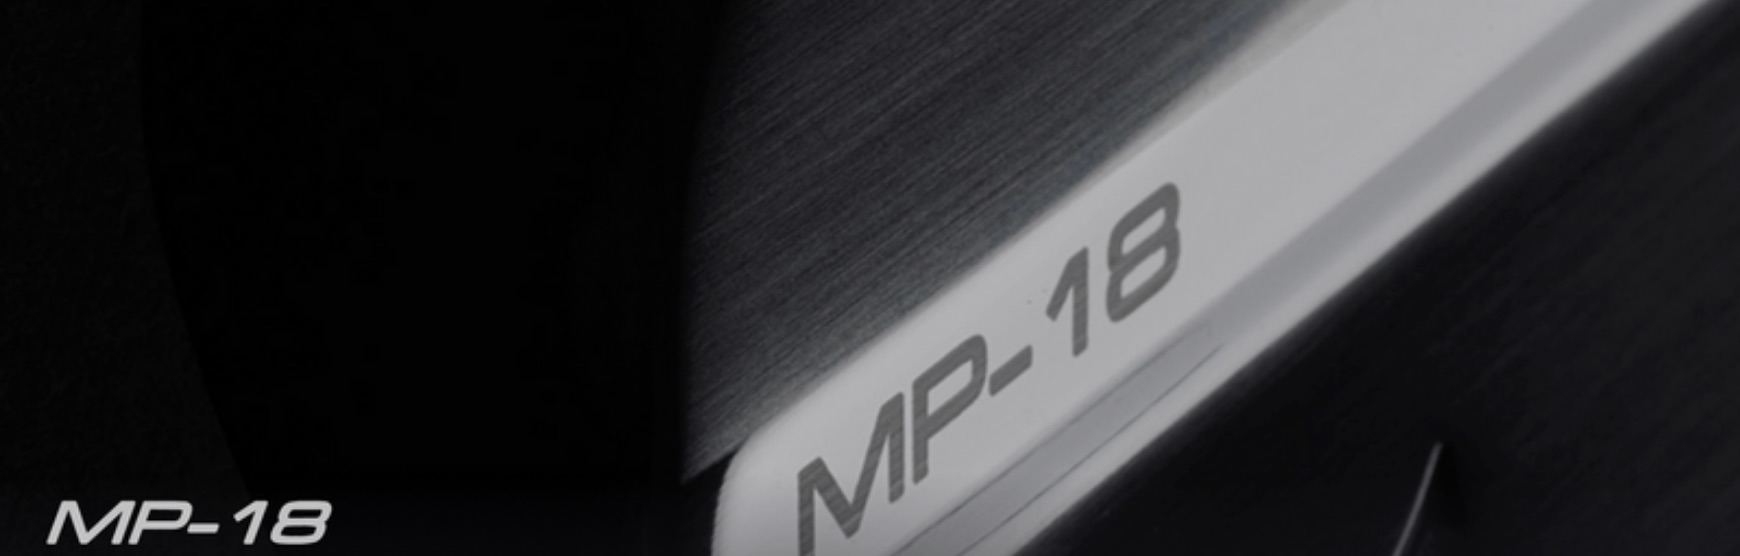 MIZUNO MP-18 IRONS